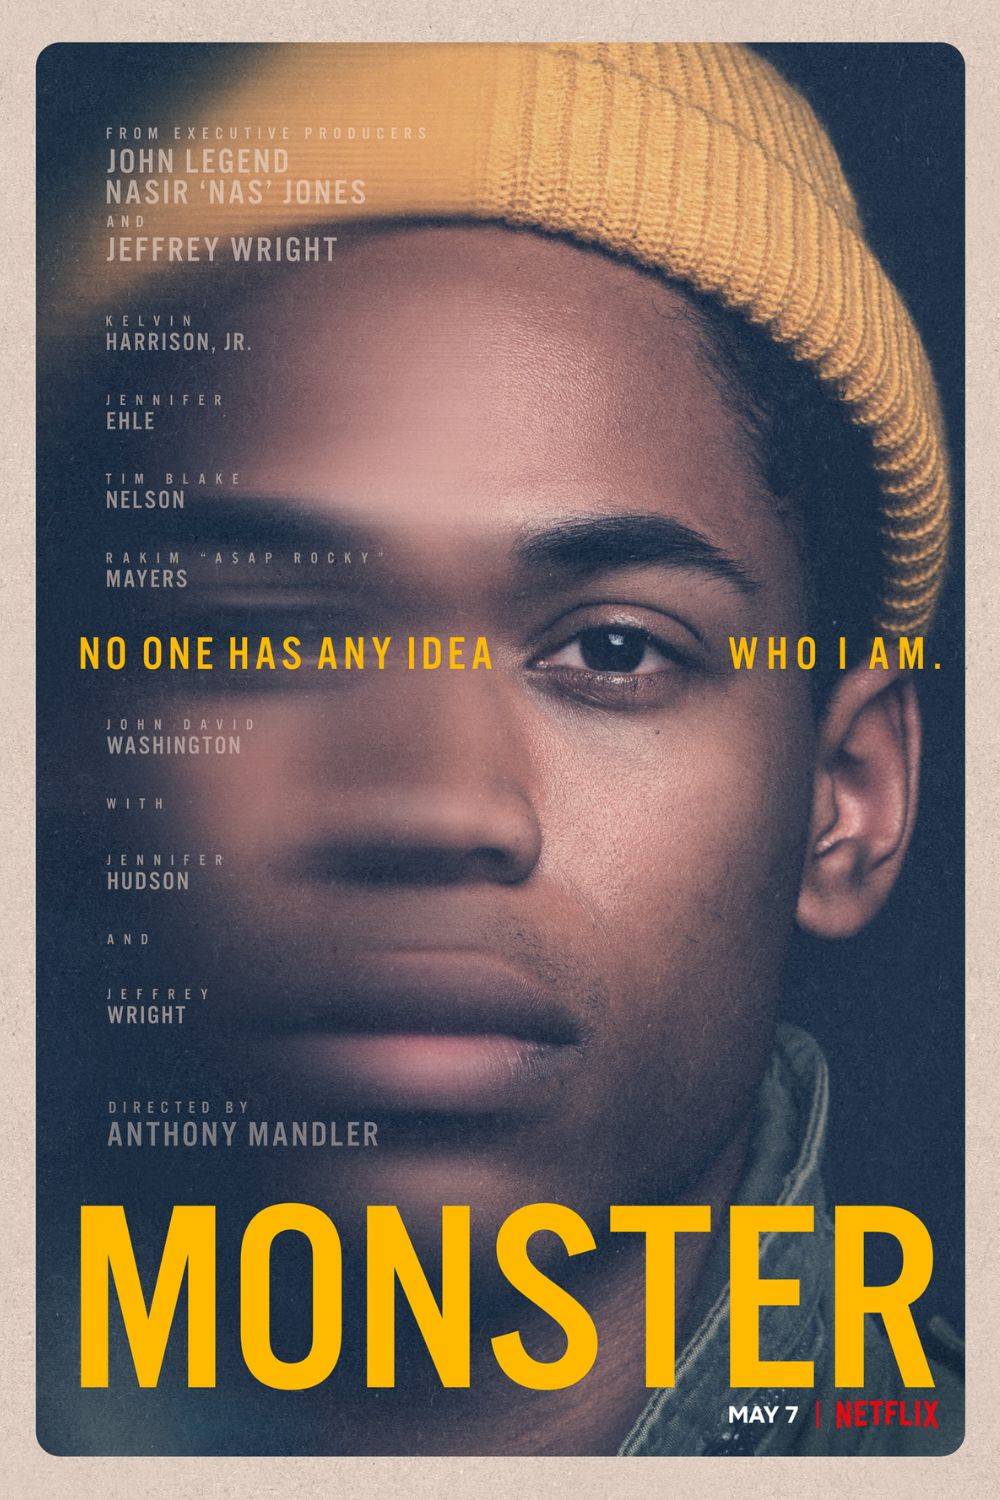 Monstruo (2018)